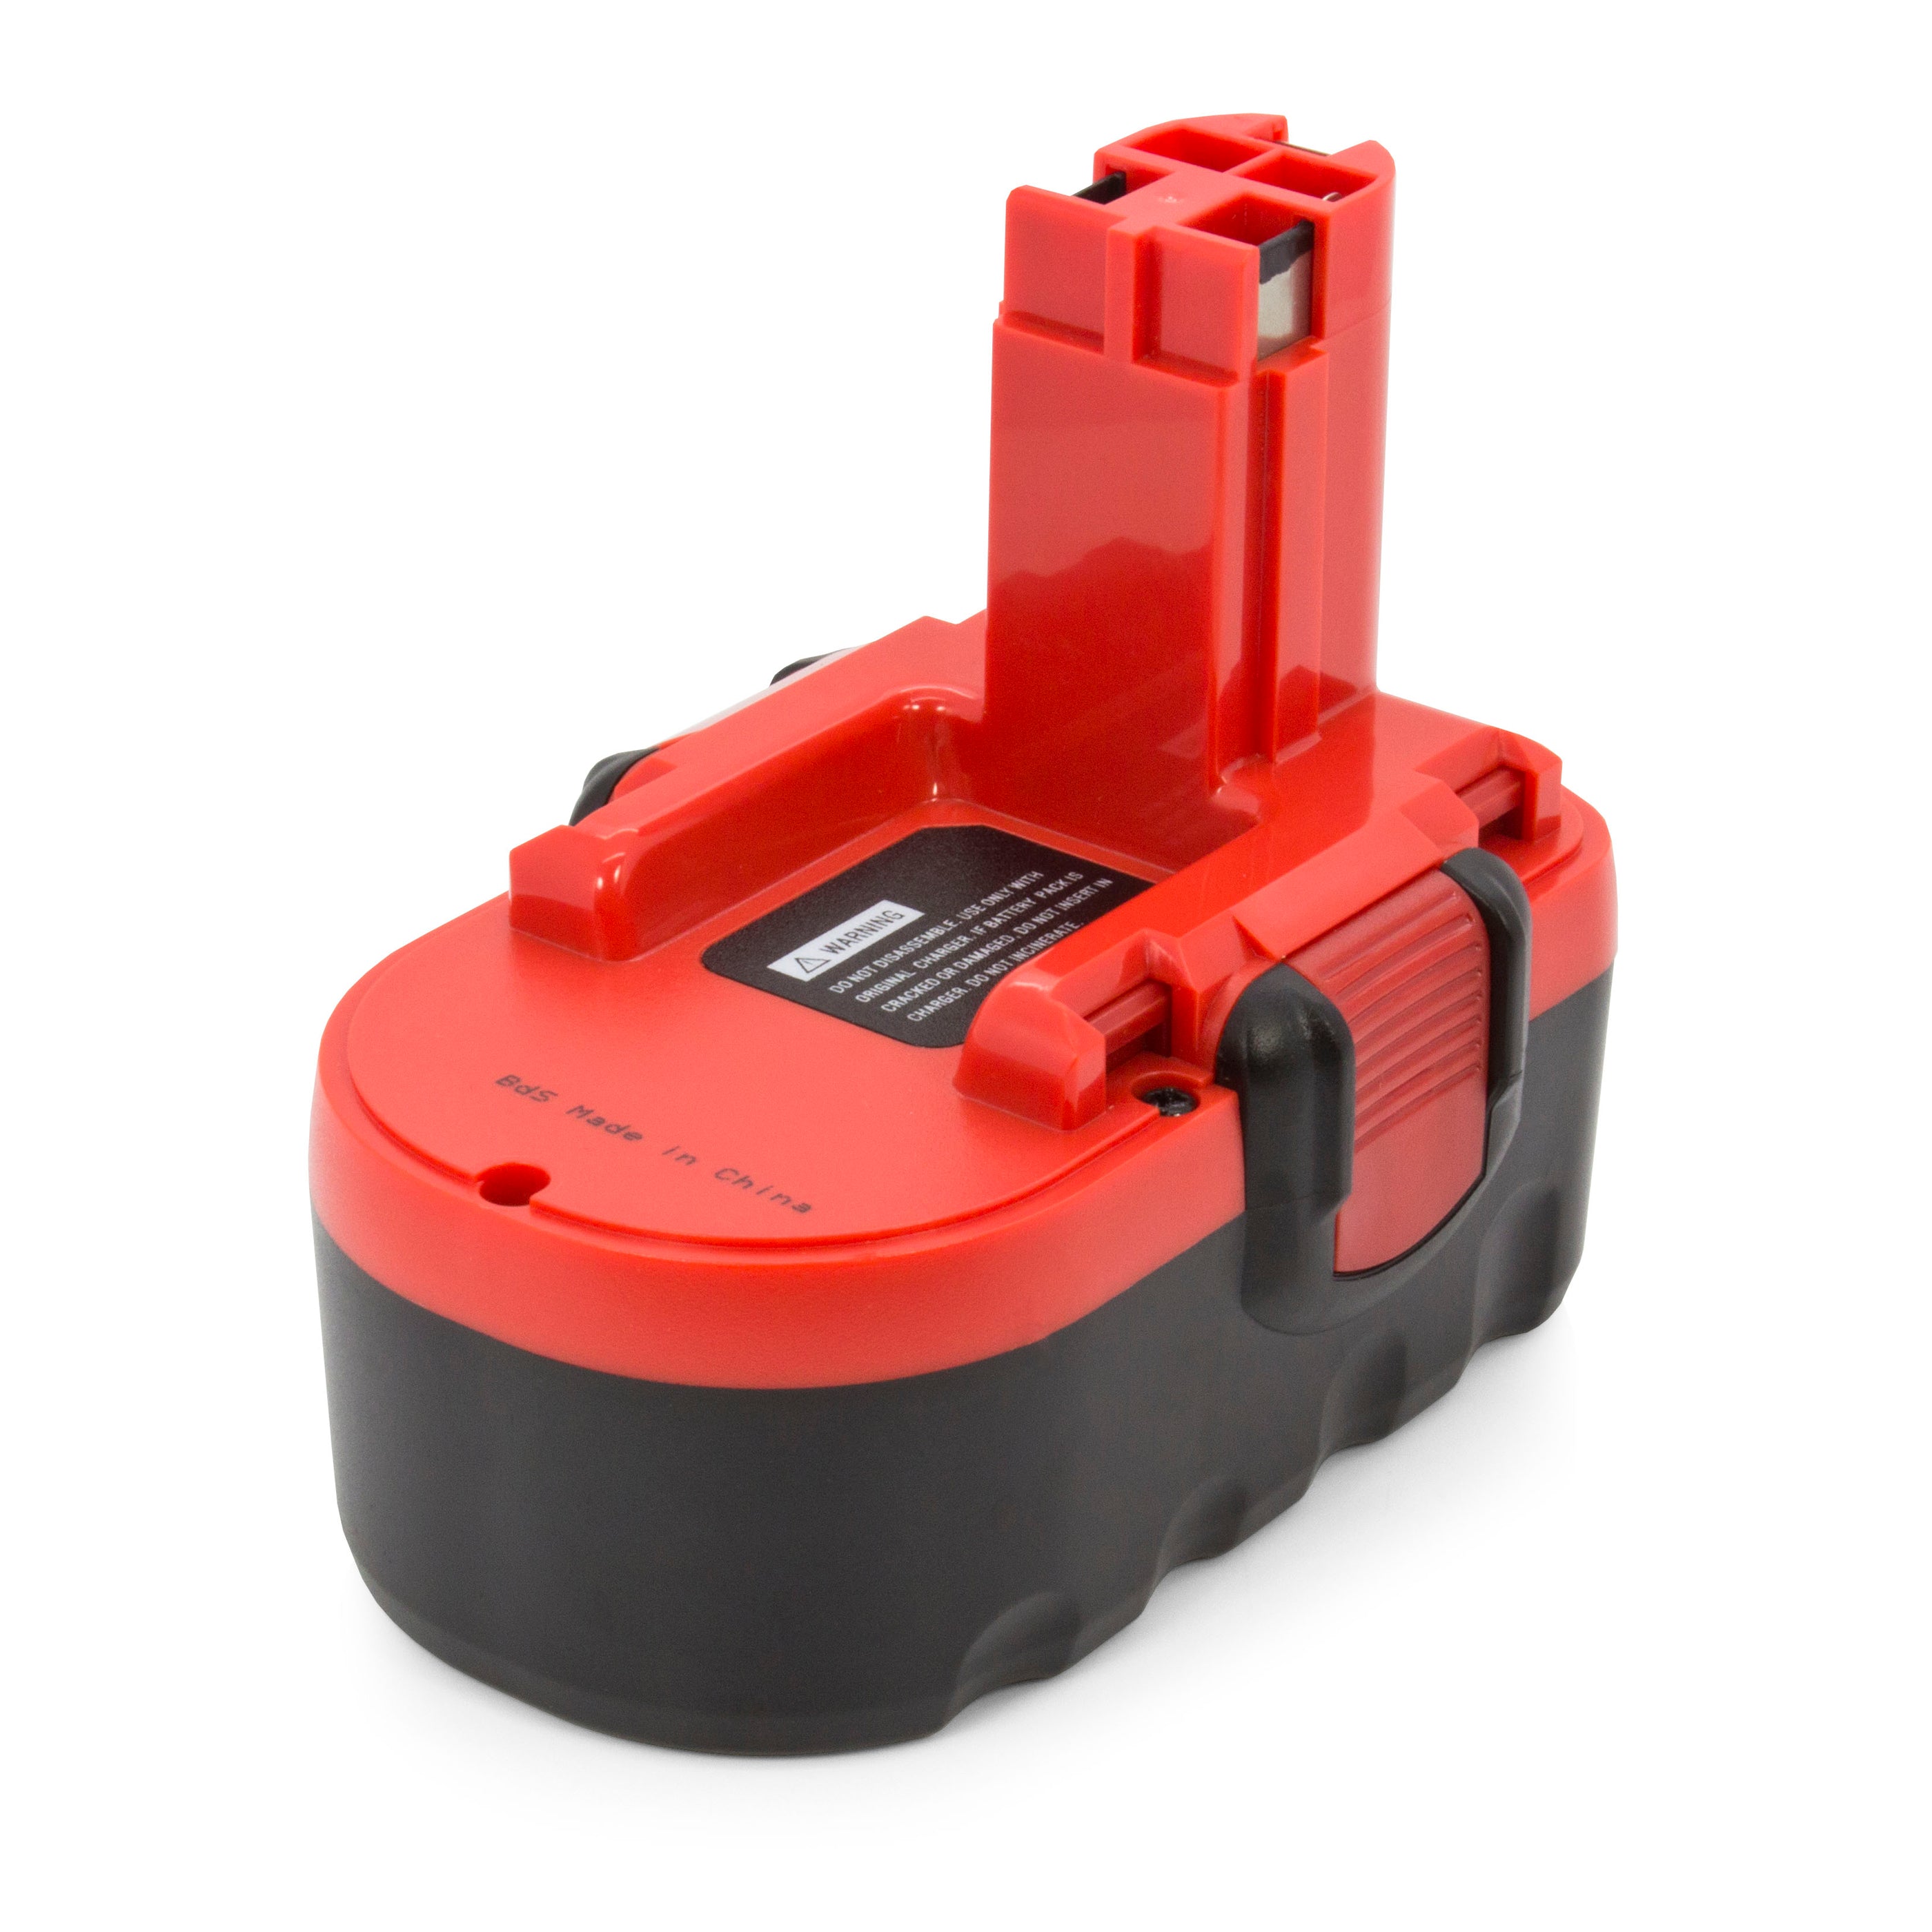 Pack 2 batteries compatible Bosch 18V 4Ah + 1 chargeur simple - Cori